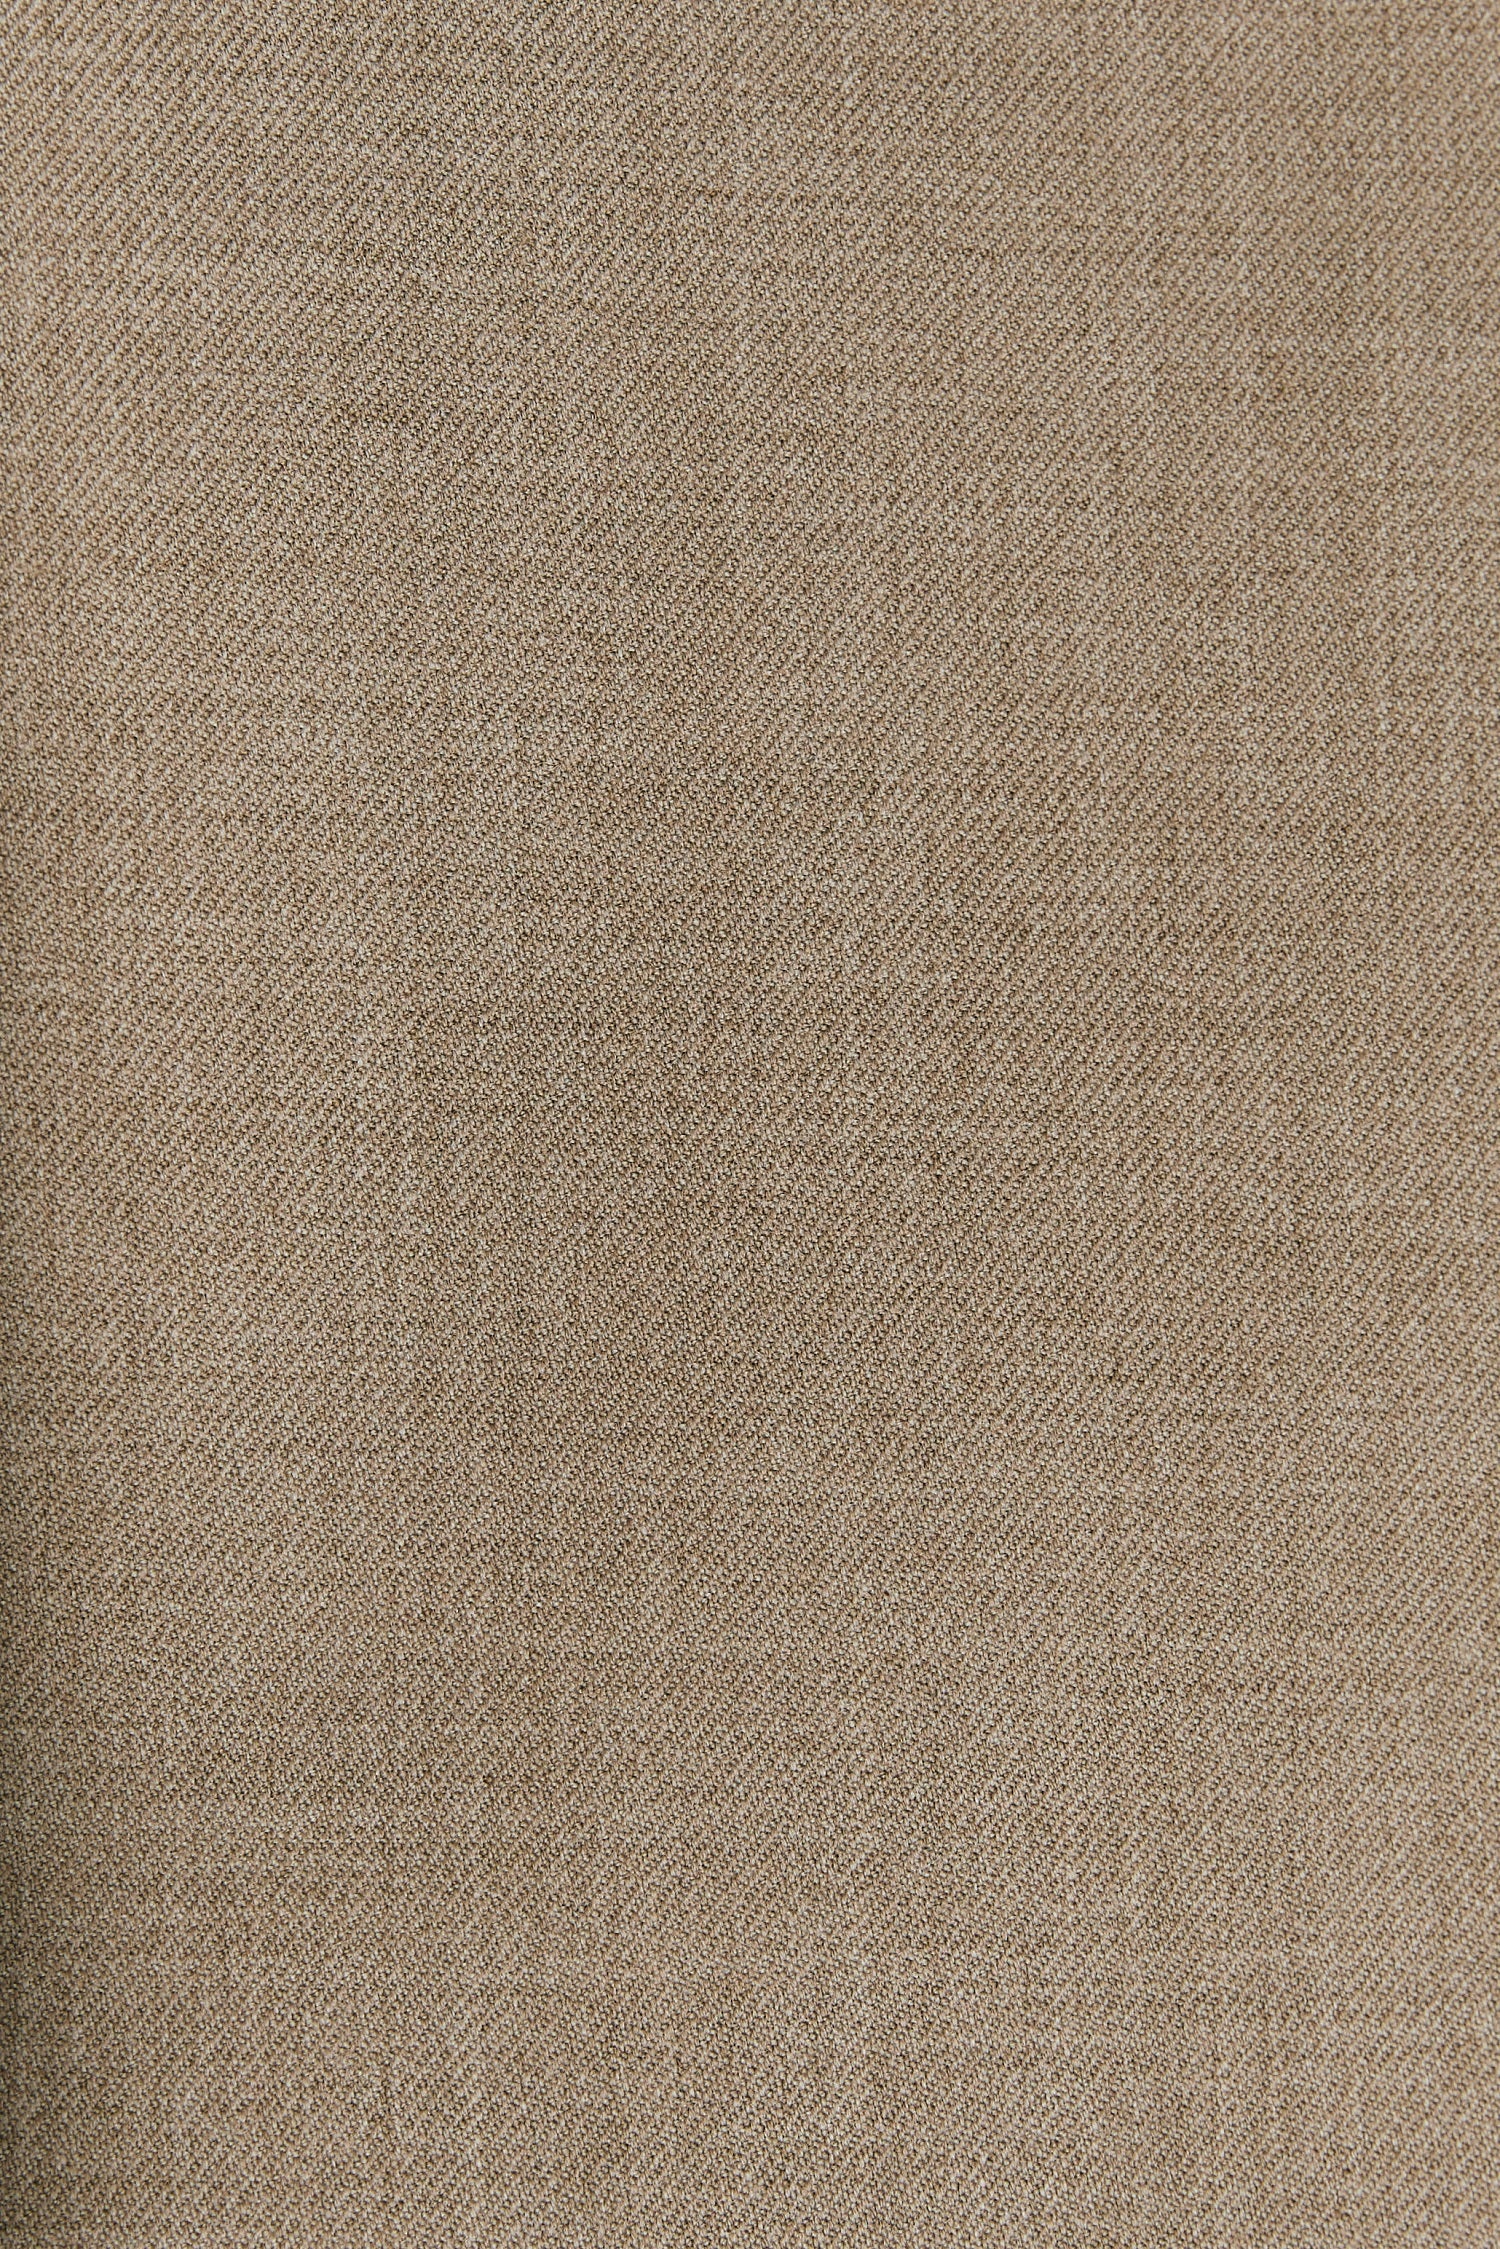 Flat-fronted in beige wool